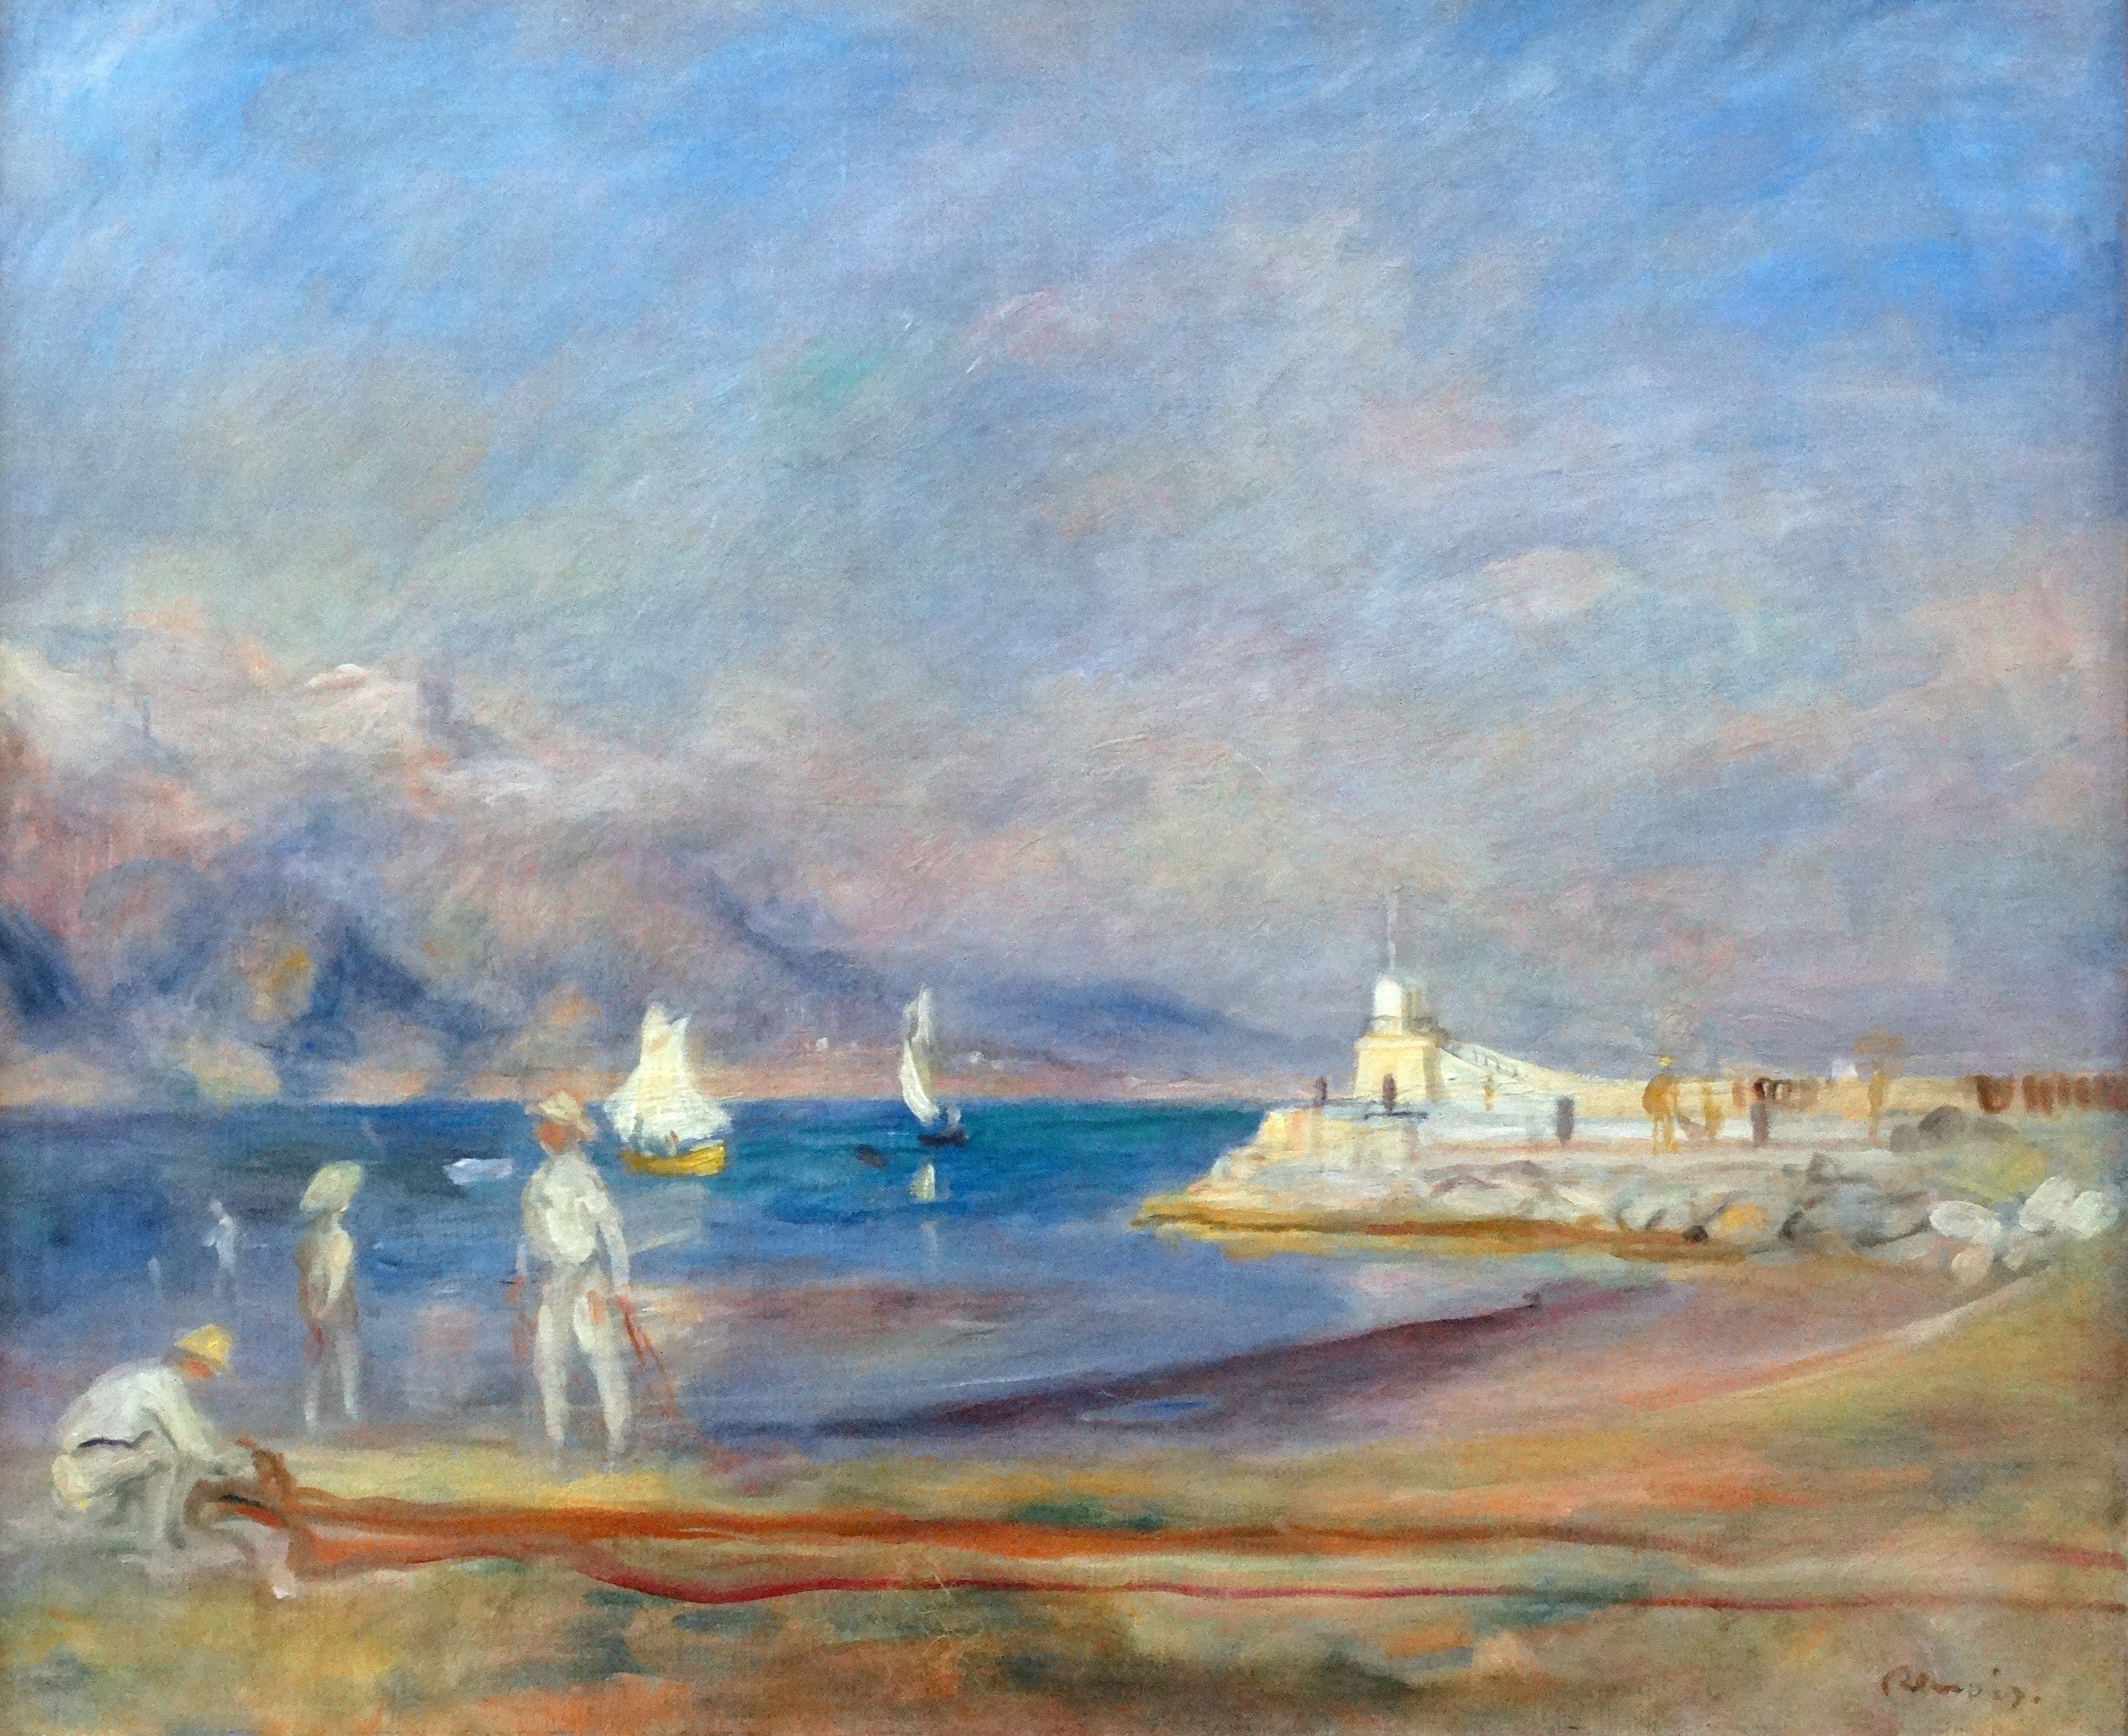  St. Tropez, 1902. Olio su tela, 54,5 x 65,4 cm. Birmingham Museum and Art Gallery, Birminghham. Credito: Photo12/Ann Ronan Picture Library/contrasto 